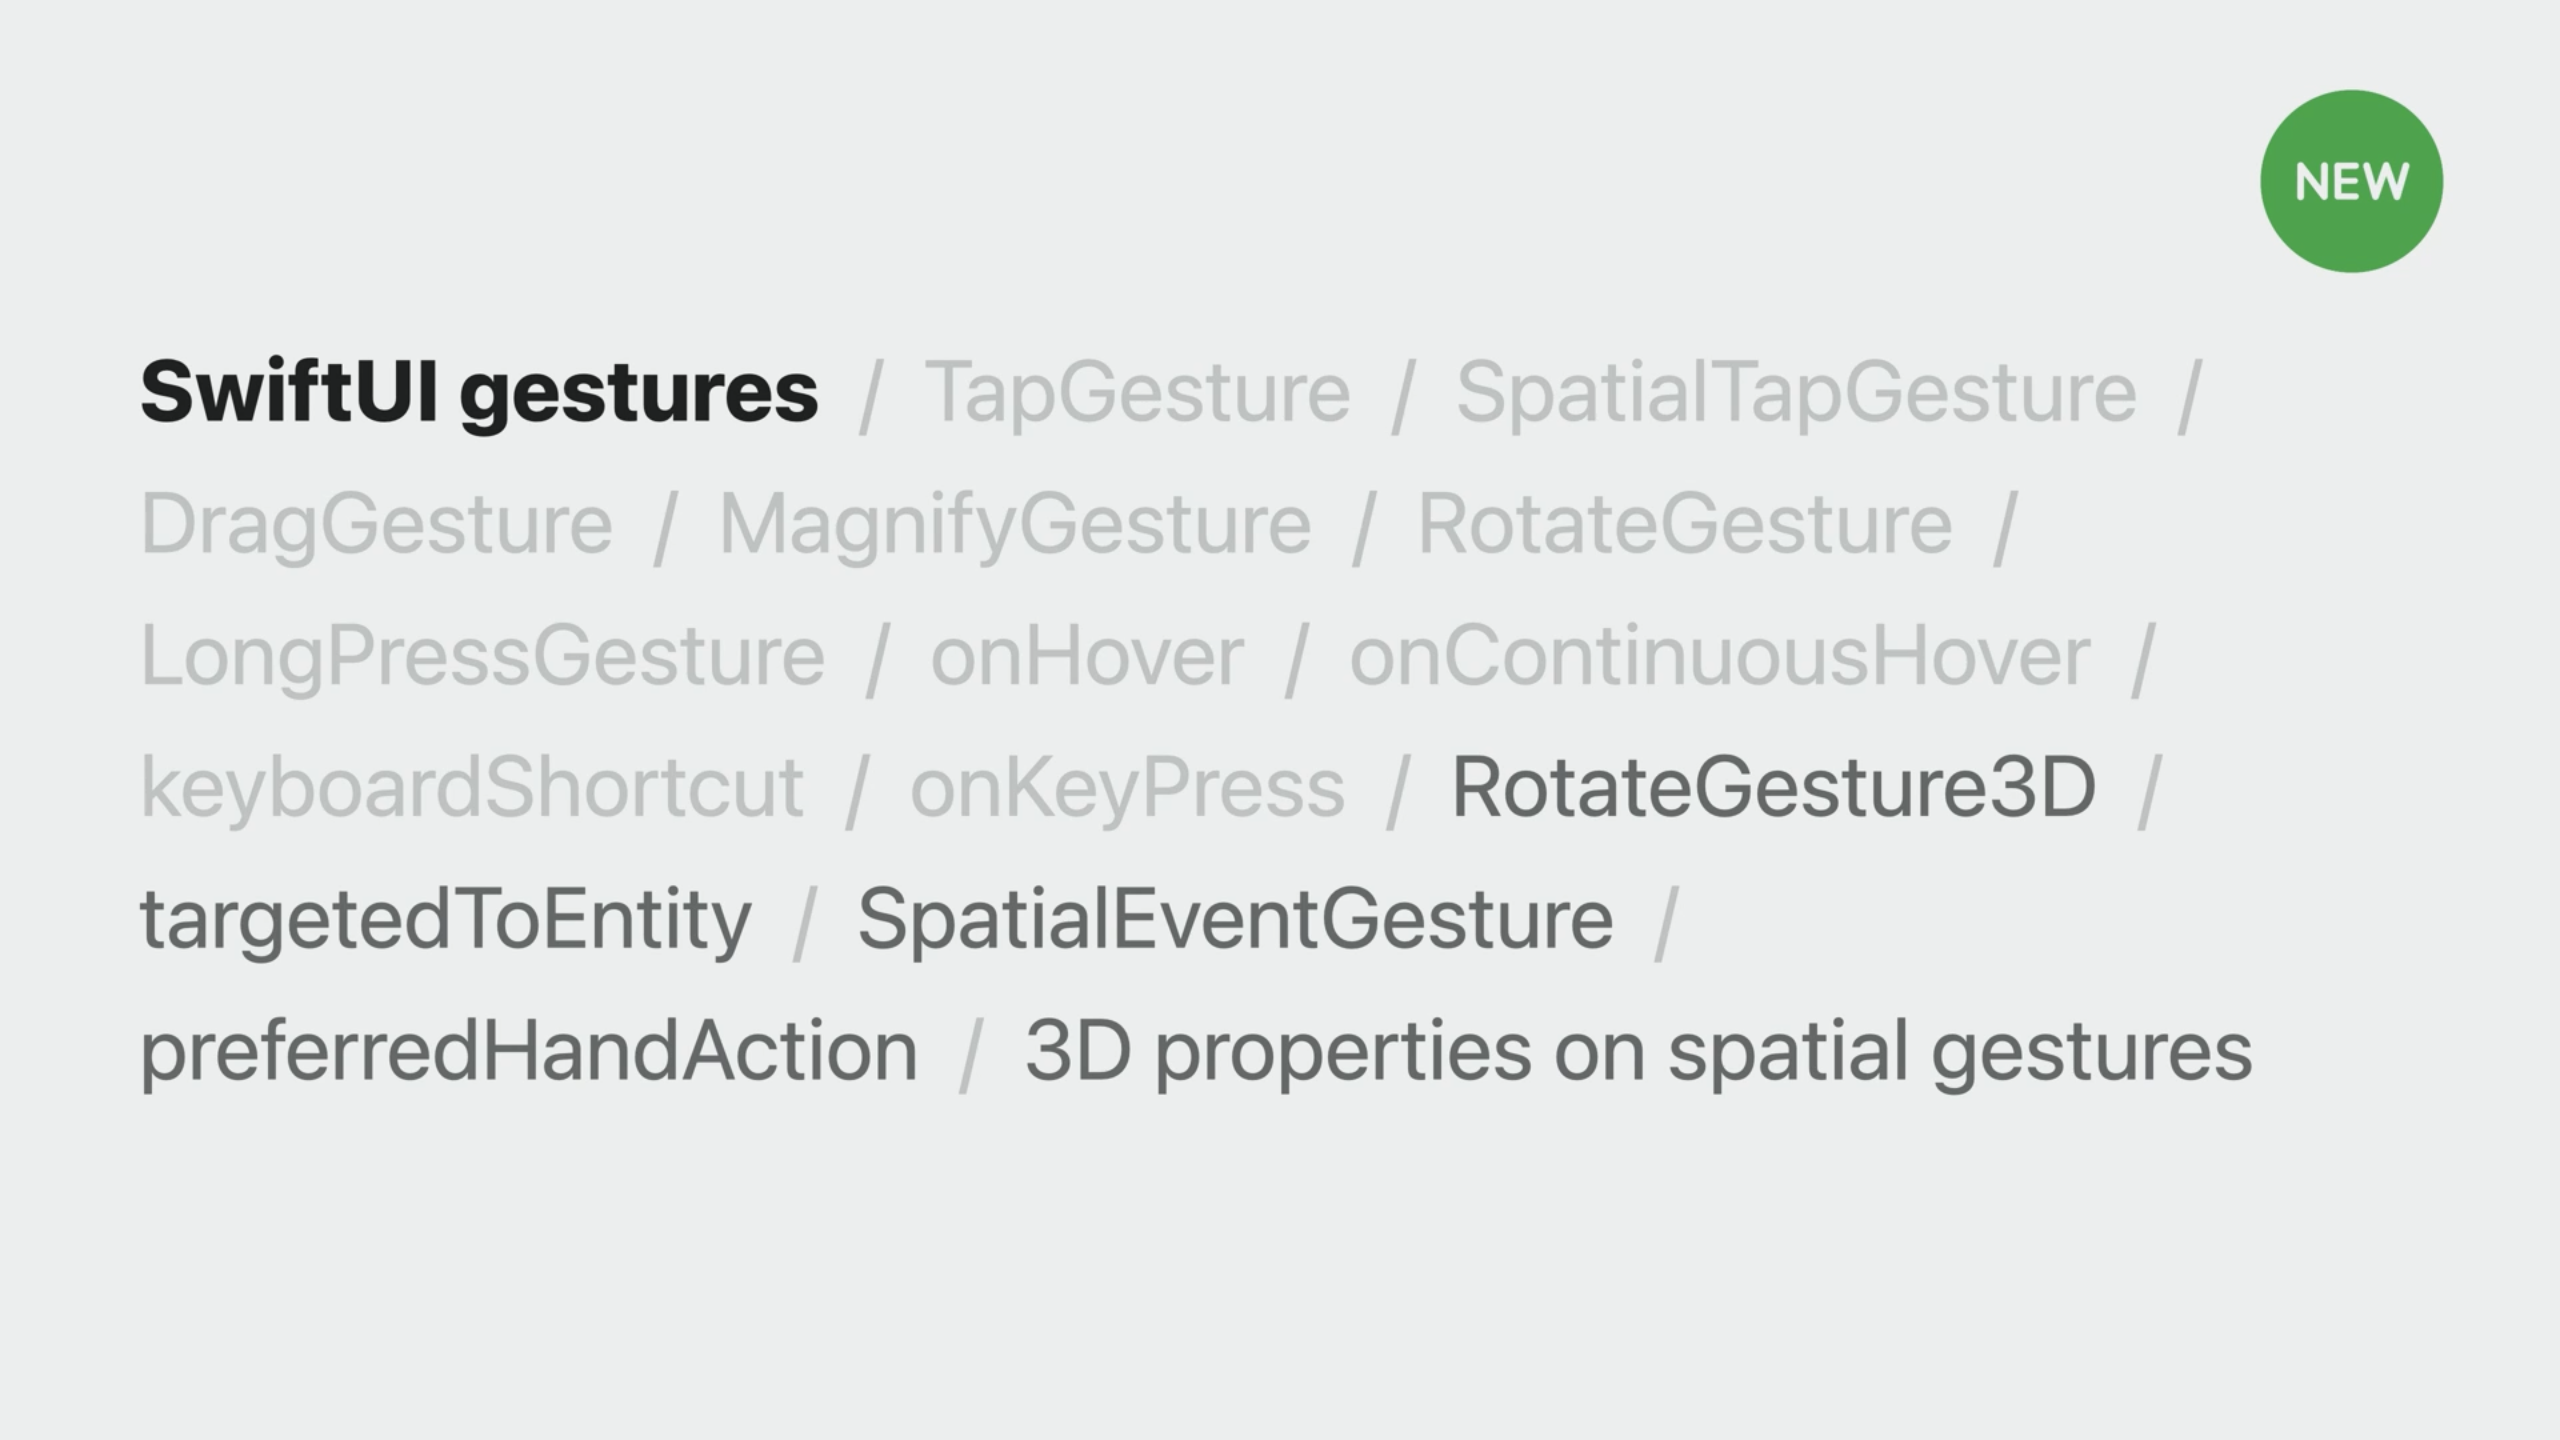 New SwiftUI gestures: RotateGesture3D, targetedToEntity, SpatialEventGesture, preferredHandAction, 3D properties on spatial gestures